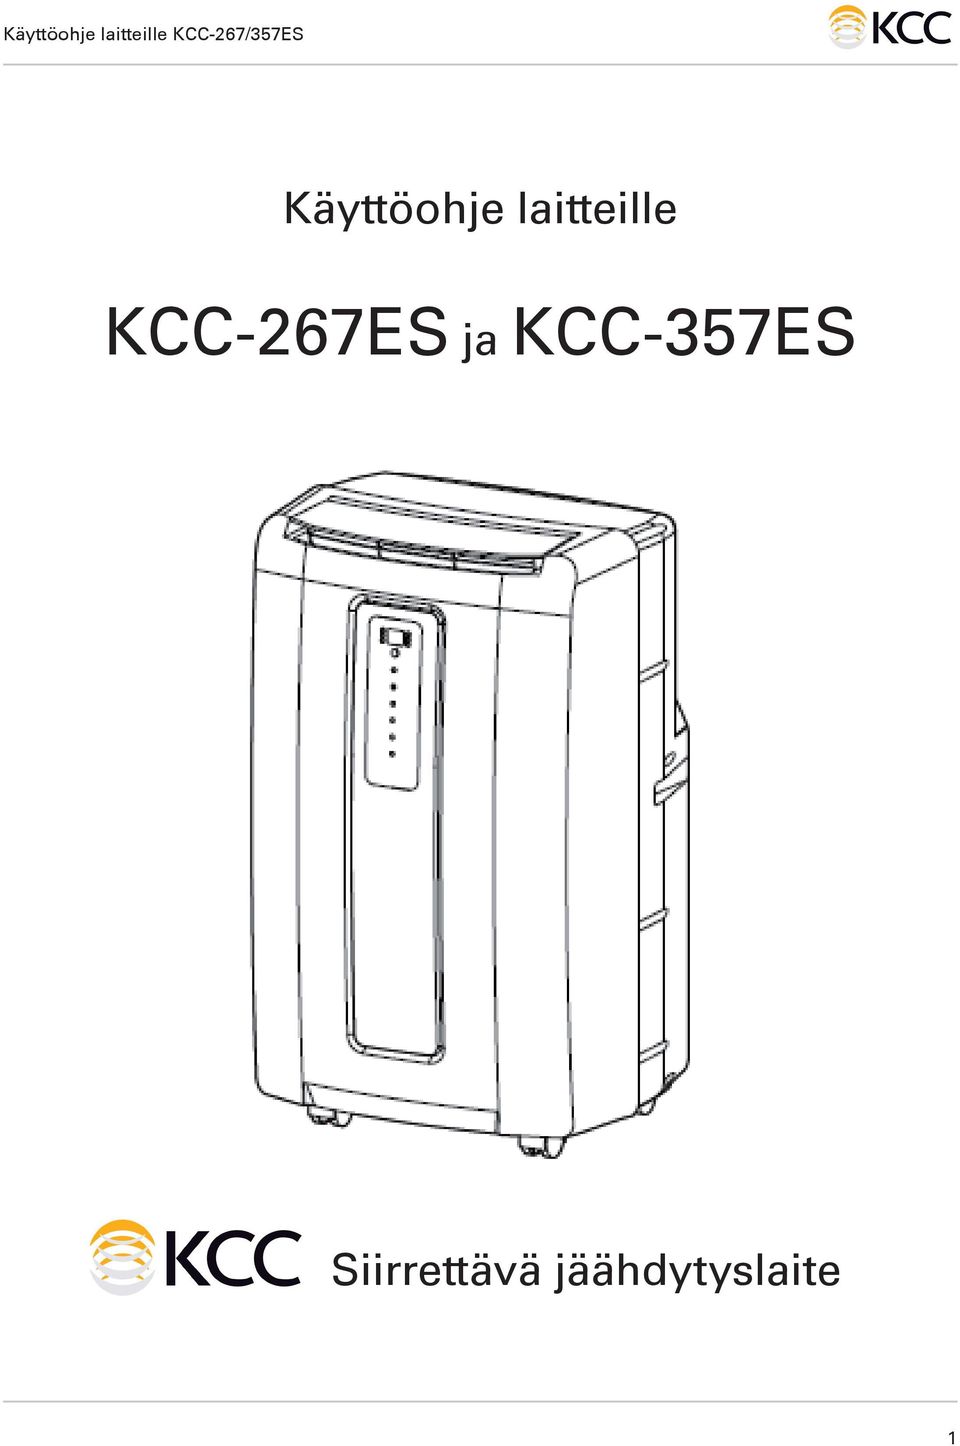 KCC-267ES ja KCC-357ES - PDF Free Download